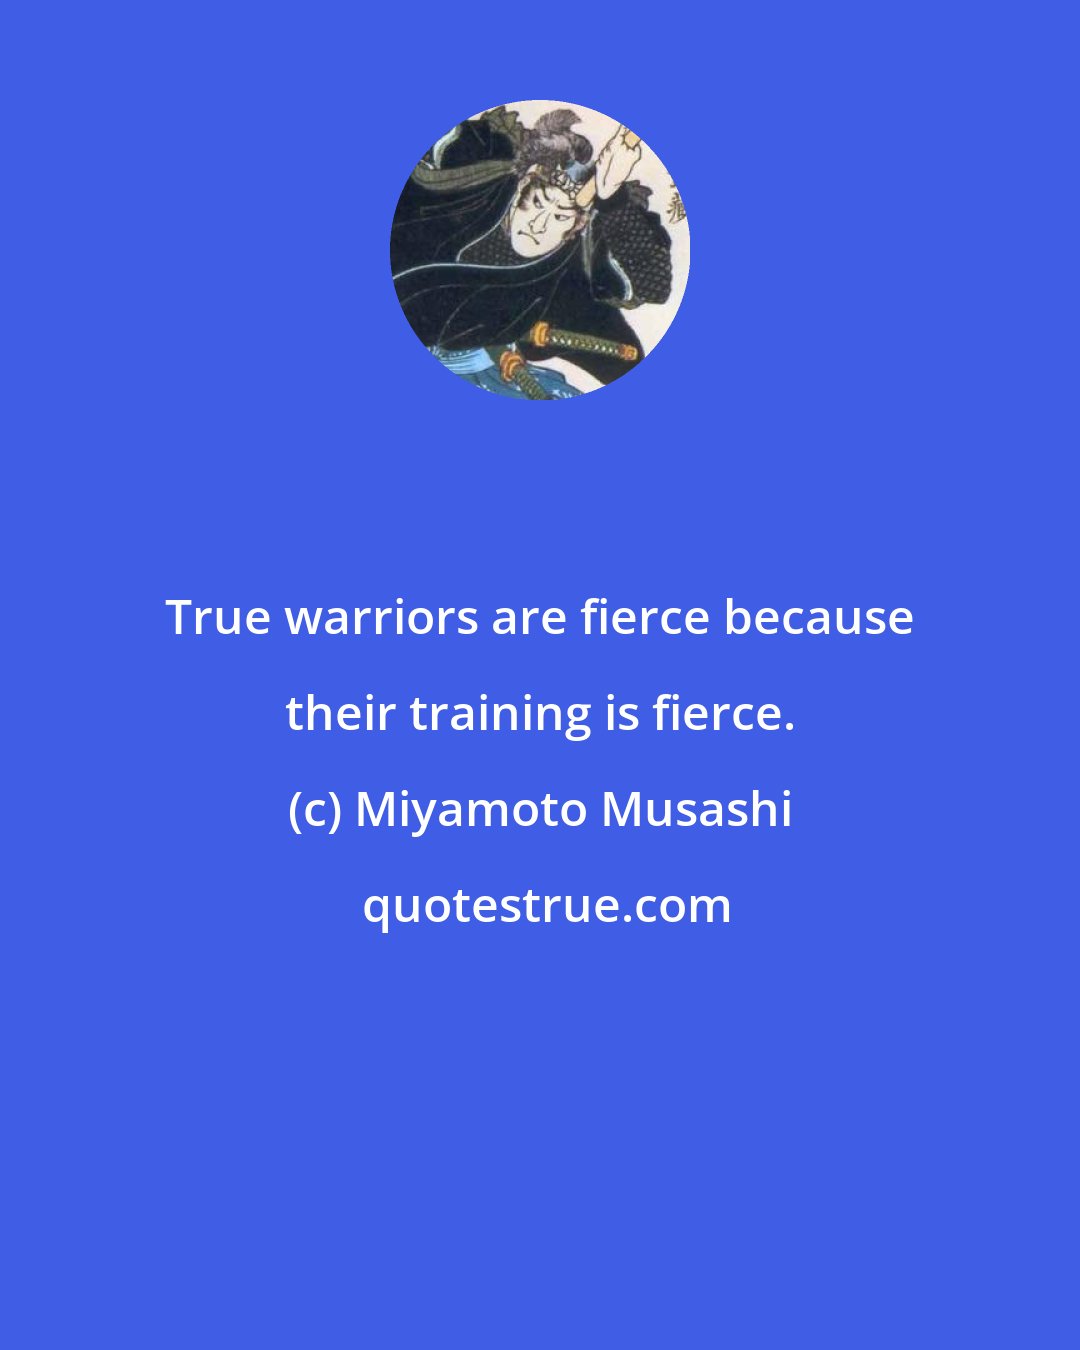 Miyamoto Musashi: True warriors are fierce because their training is fierce.